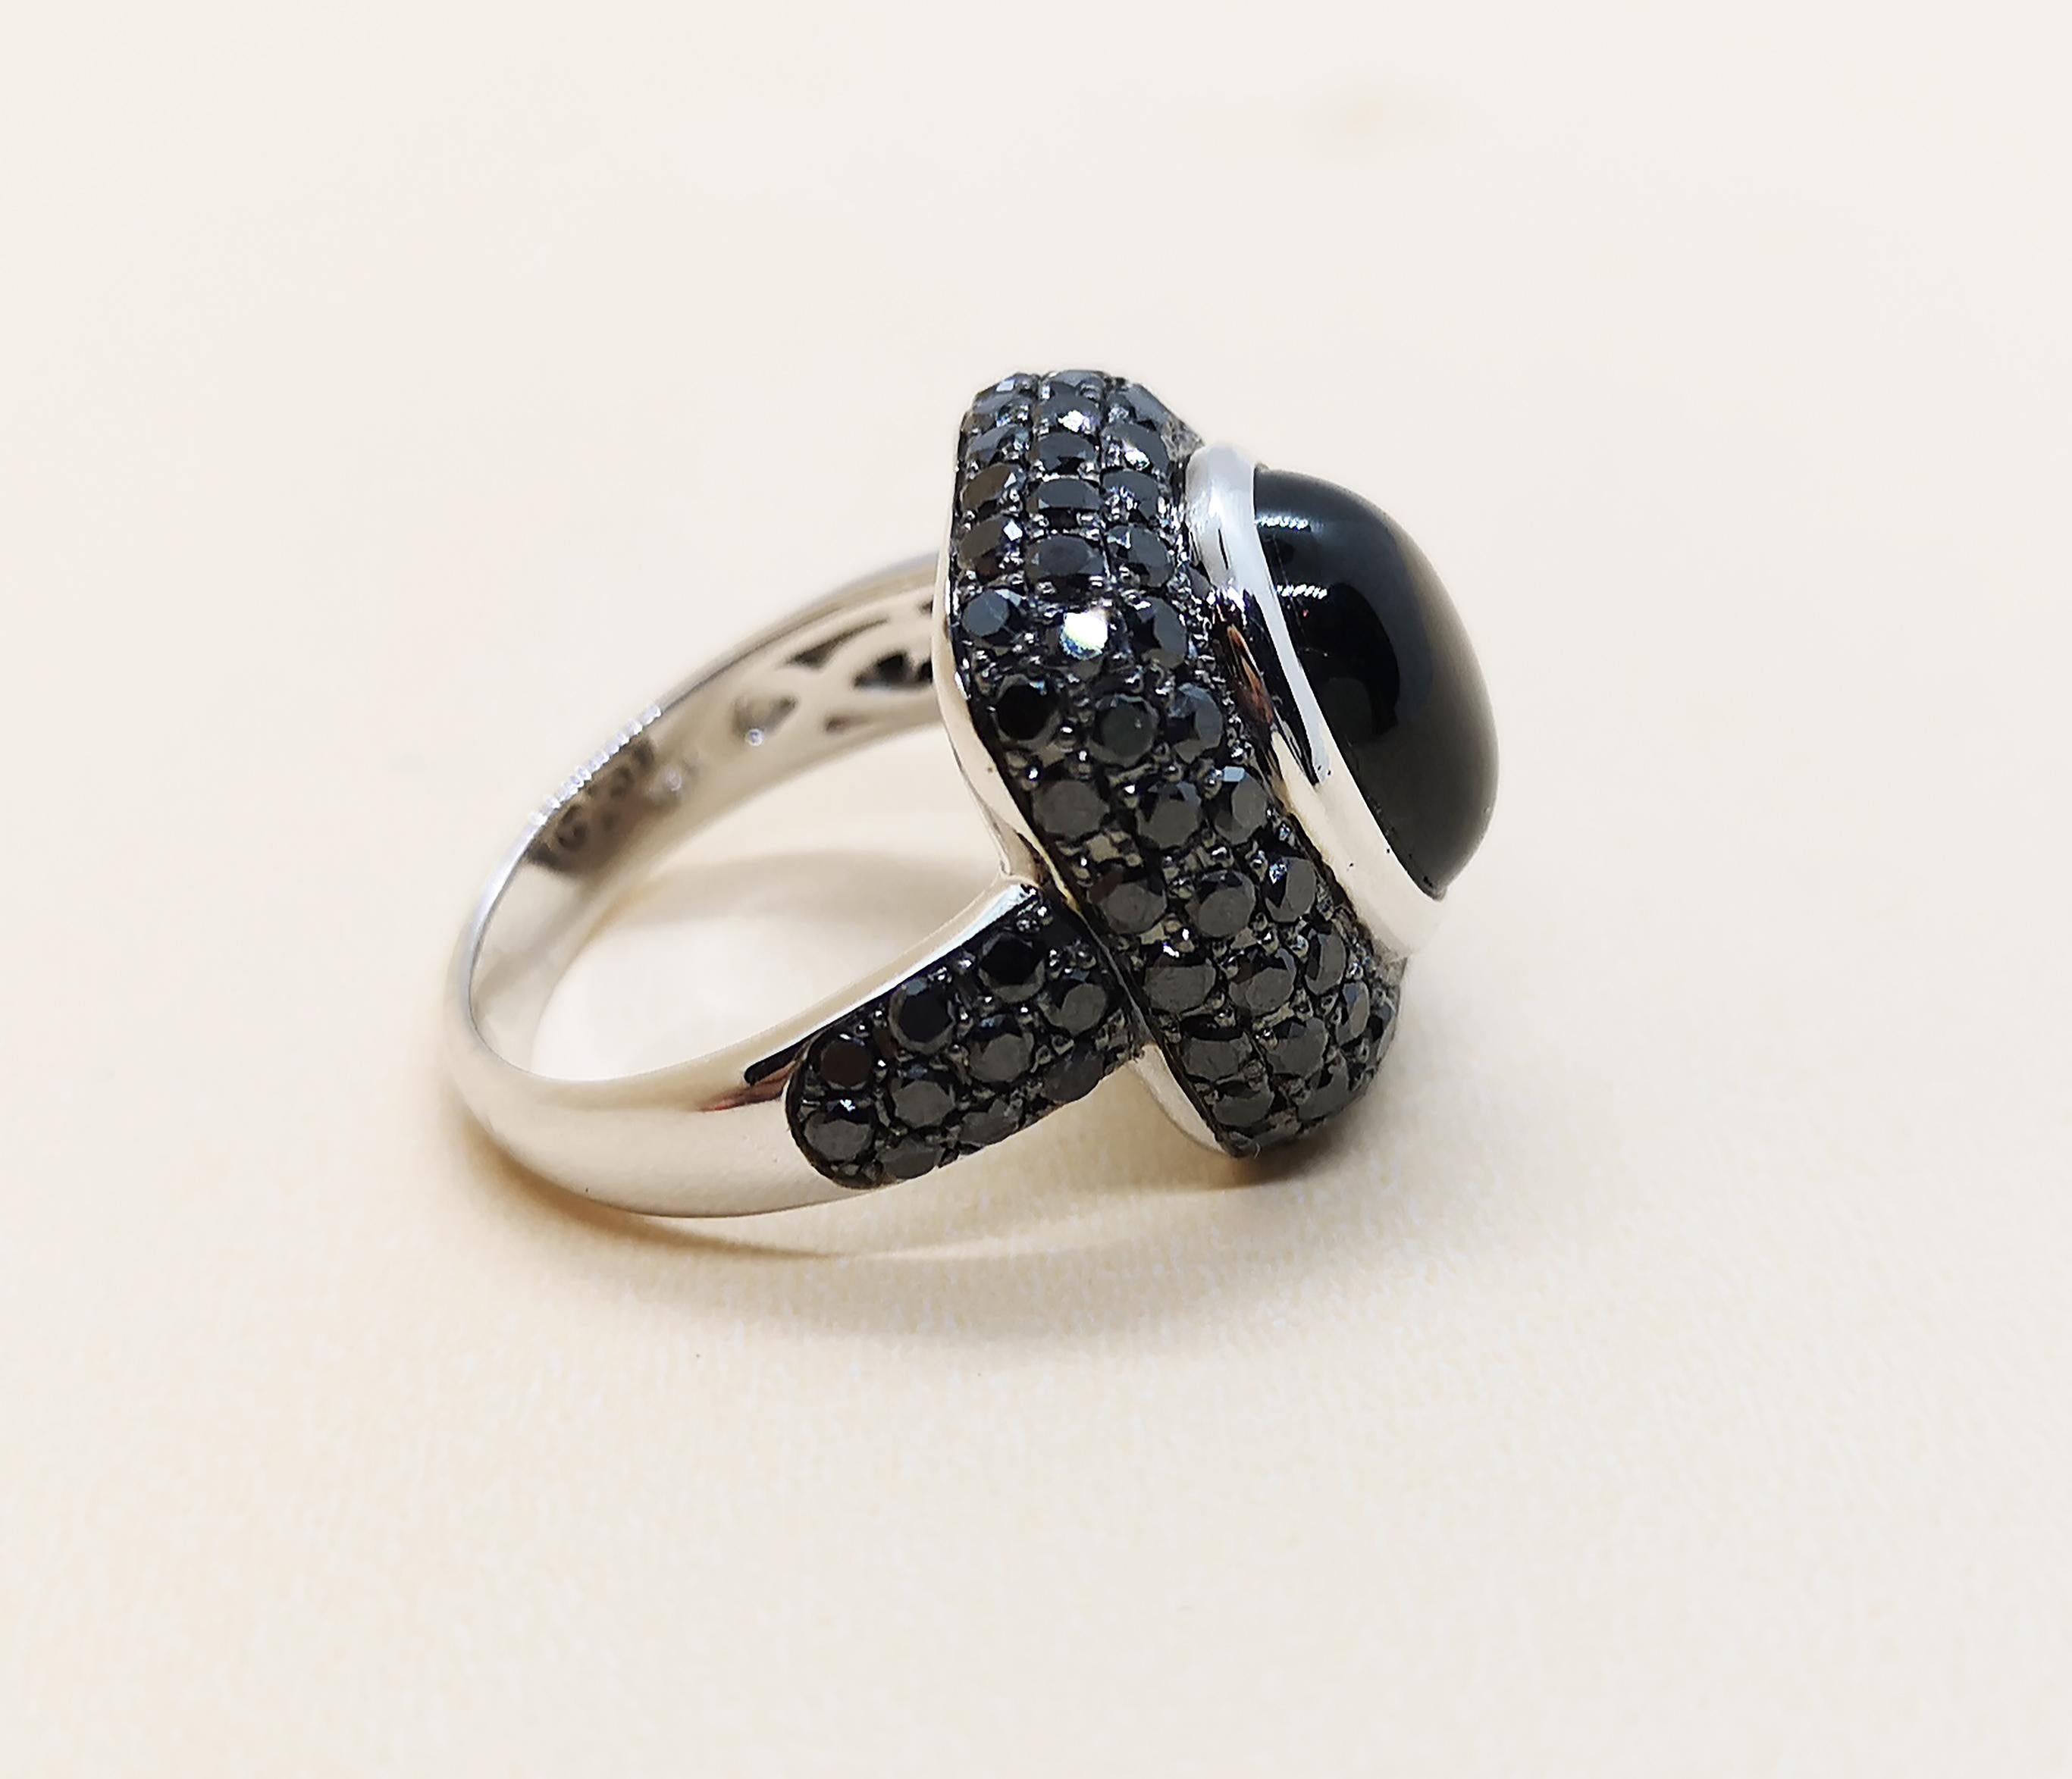 Cabochon Black Star Sapphire with Black Diamond Ring Set in 18 Karat White Gold Settings